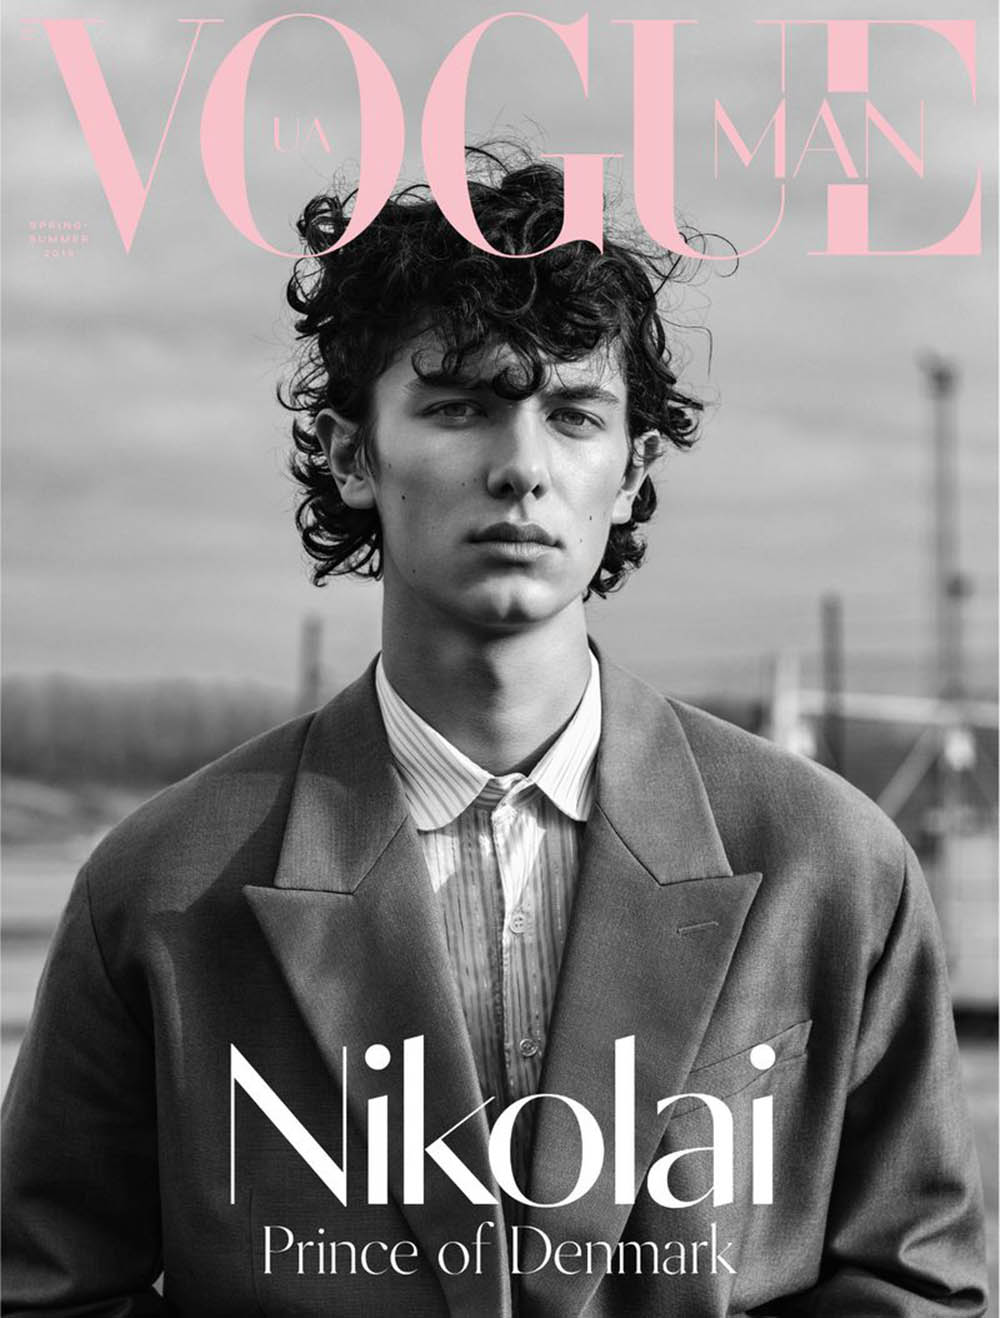 Prince Nikolai of Denmark covers Vogue Ukraine Man Spring Summer 2019 by Marco van Rijt